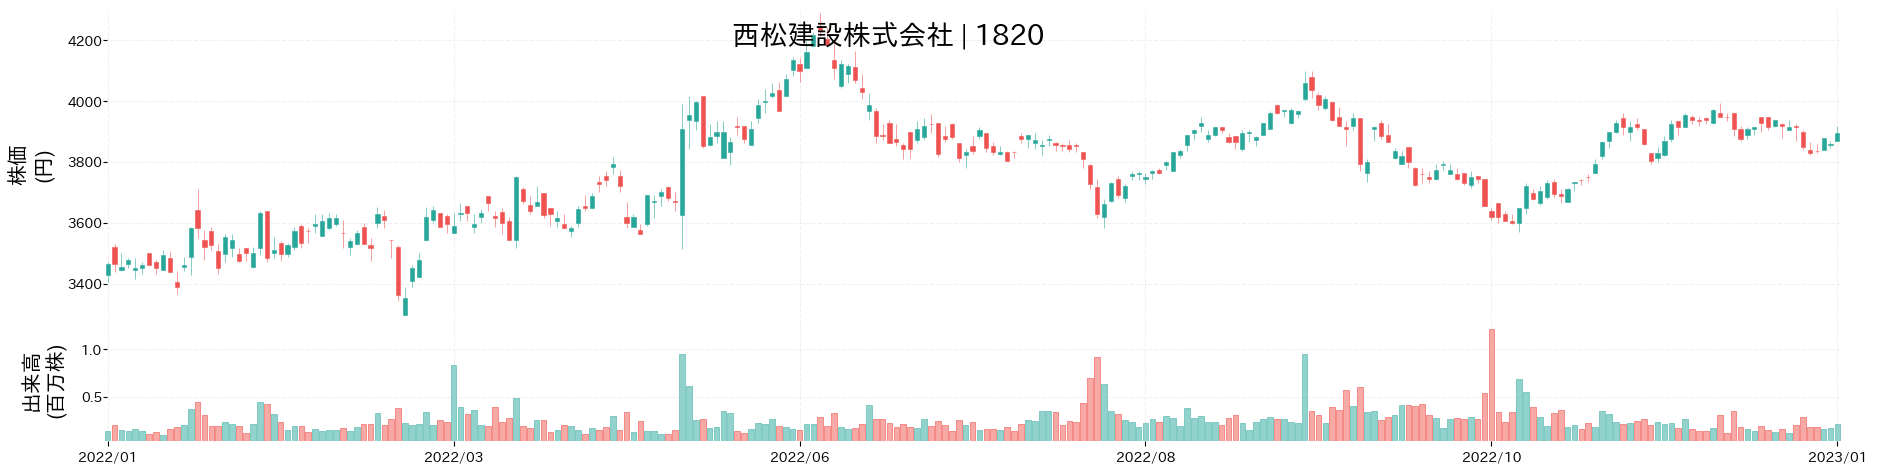 西松建設の株価推移(2022)